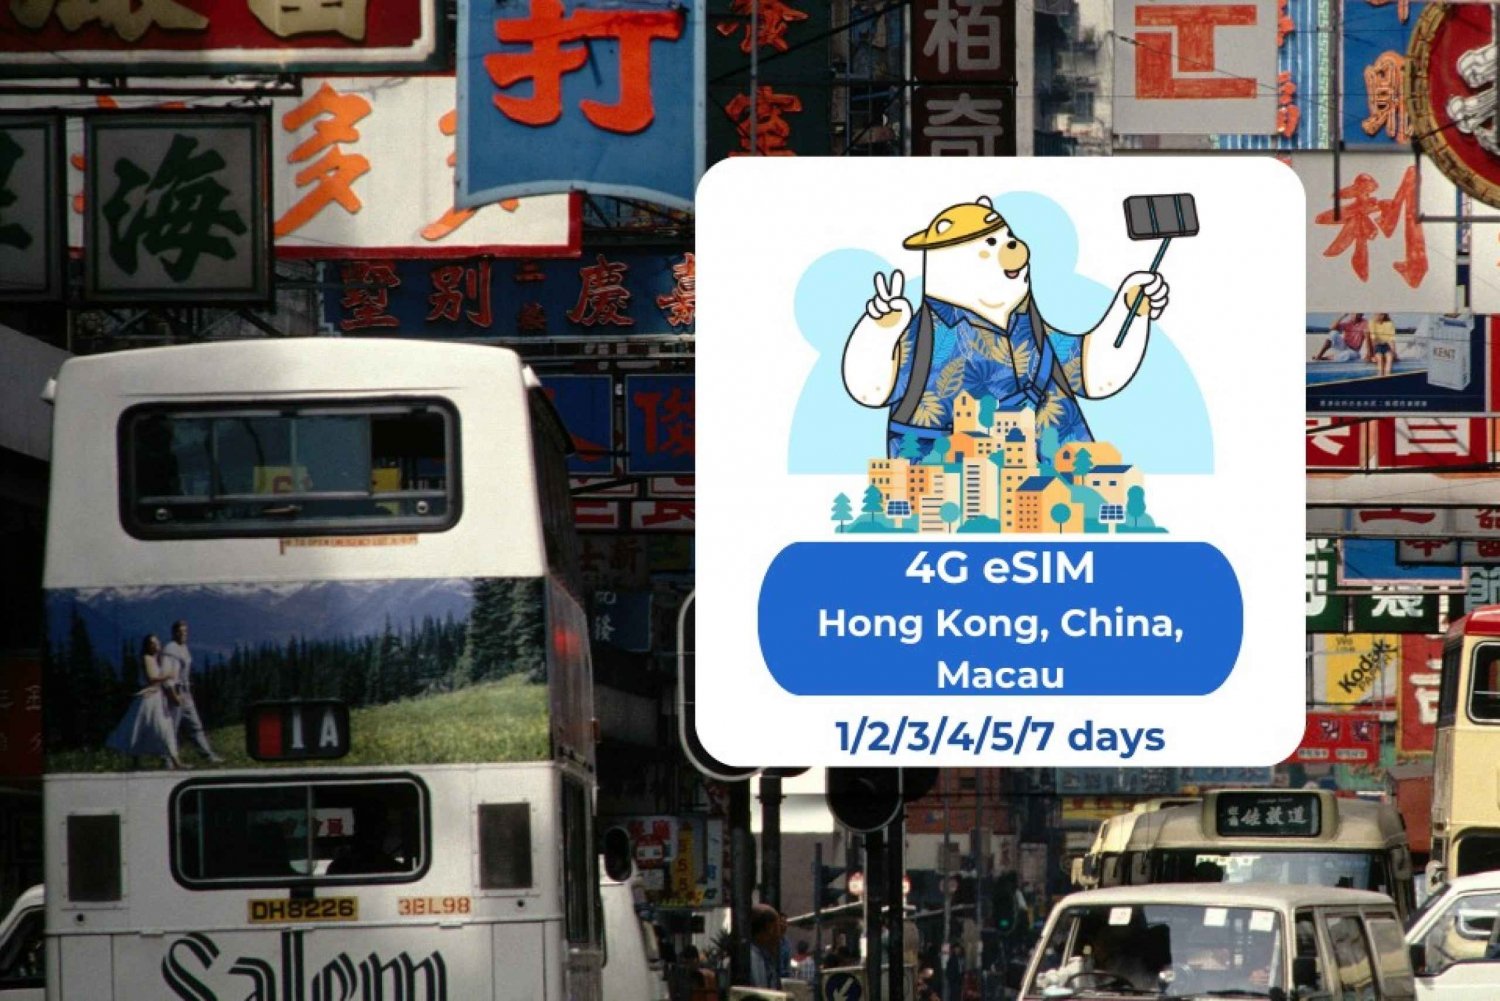 Hong Kong - Kiina - Macao: eSIM Mobile Data 1/2/3/4/4/5/7 päivää